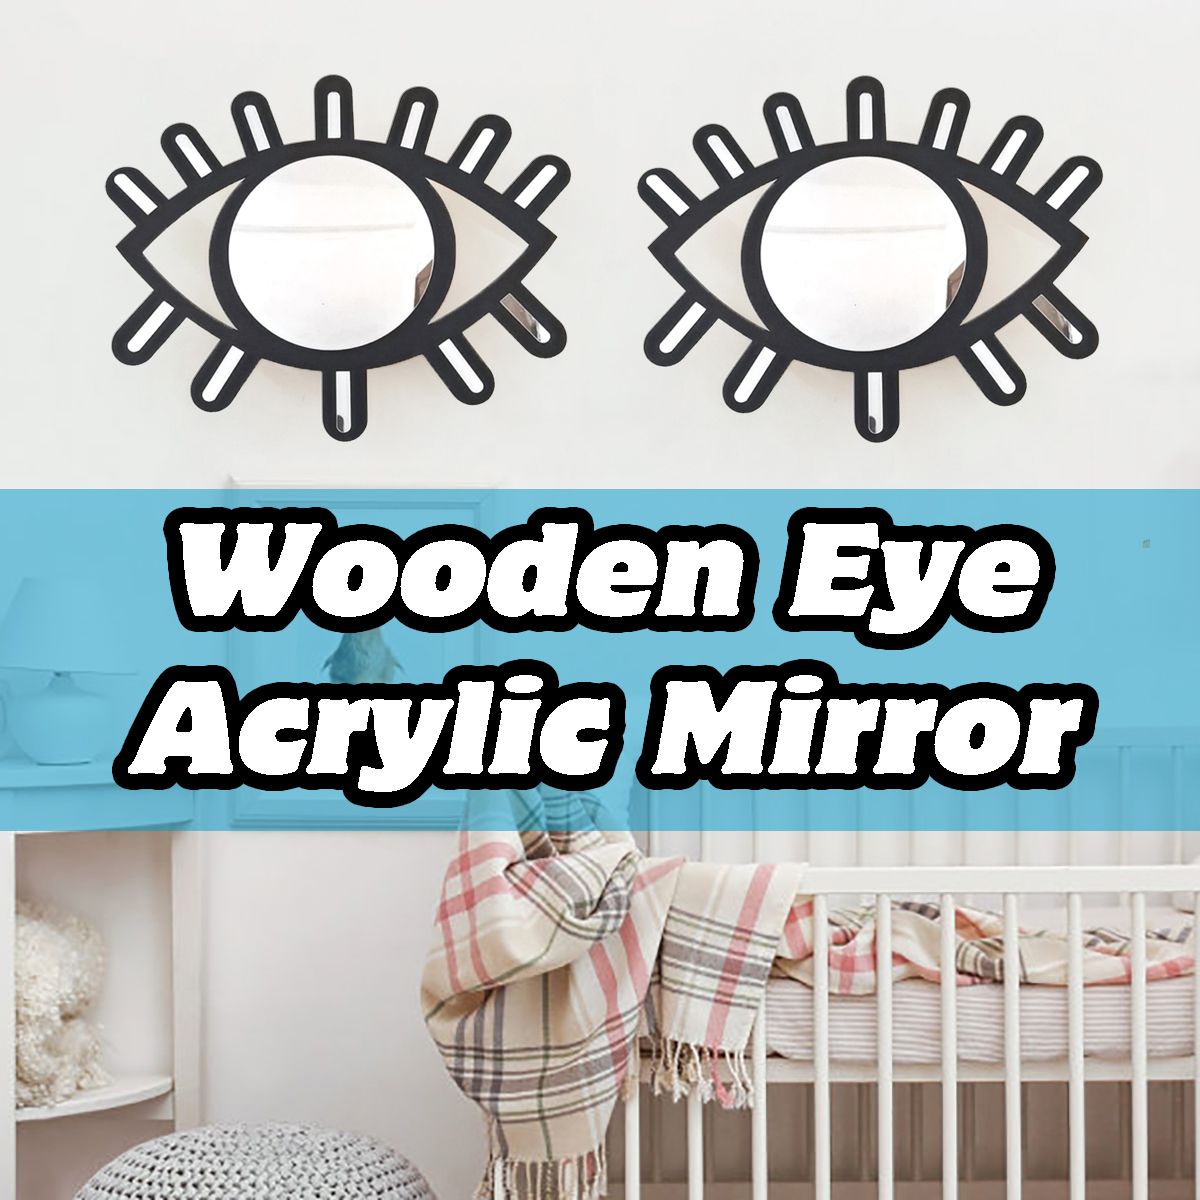 Self-Adhesive-Wooden-Eye-Acrylic-Mirror---Wall-Decoration-for-Classroom-Camping-Baby-Kids-Playroom-1723020